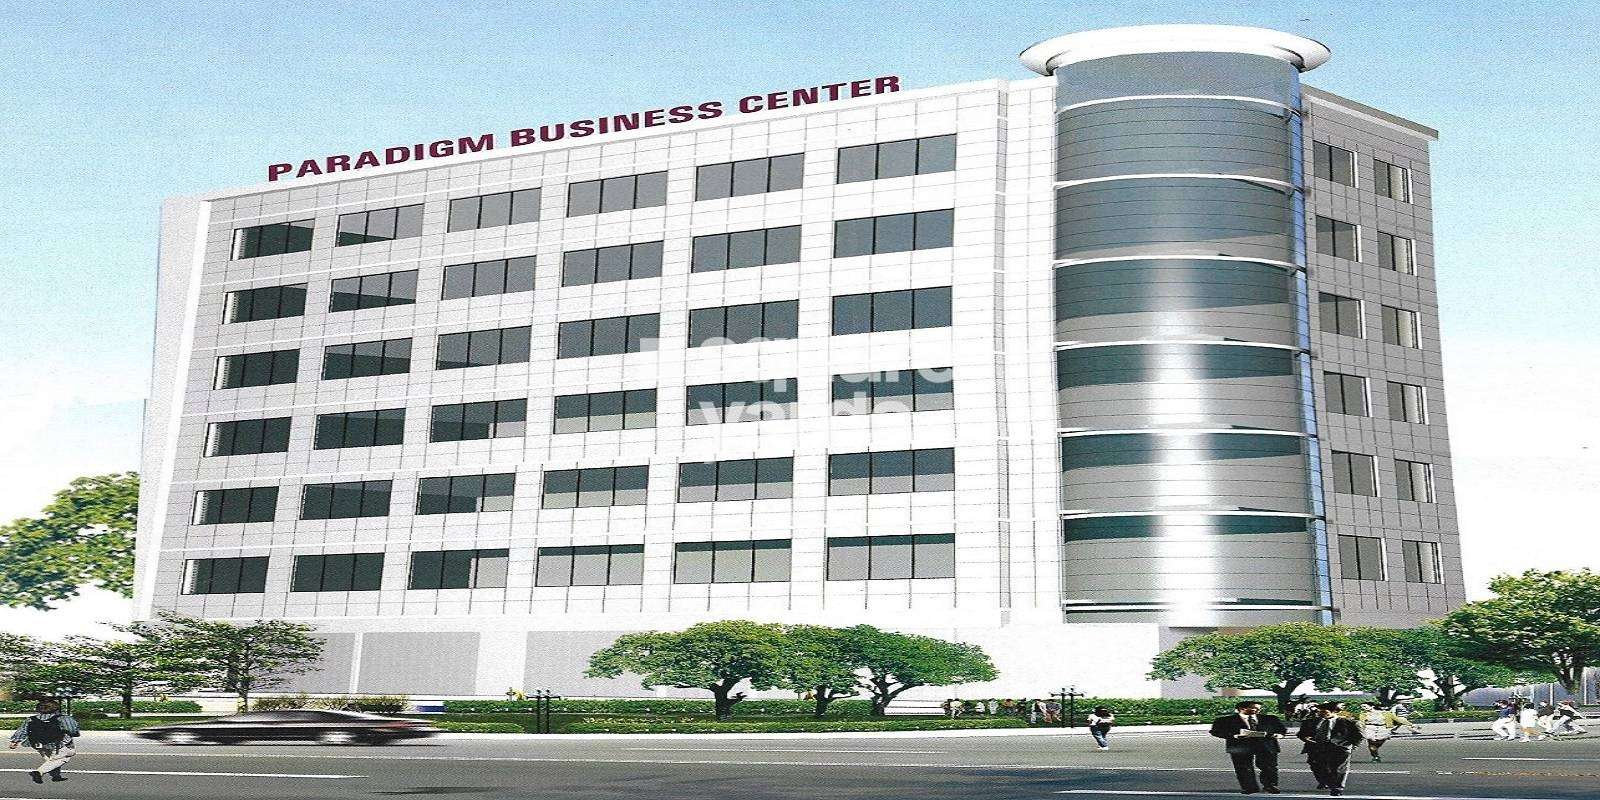 Bhagya Paradigm Business Center Cover Image